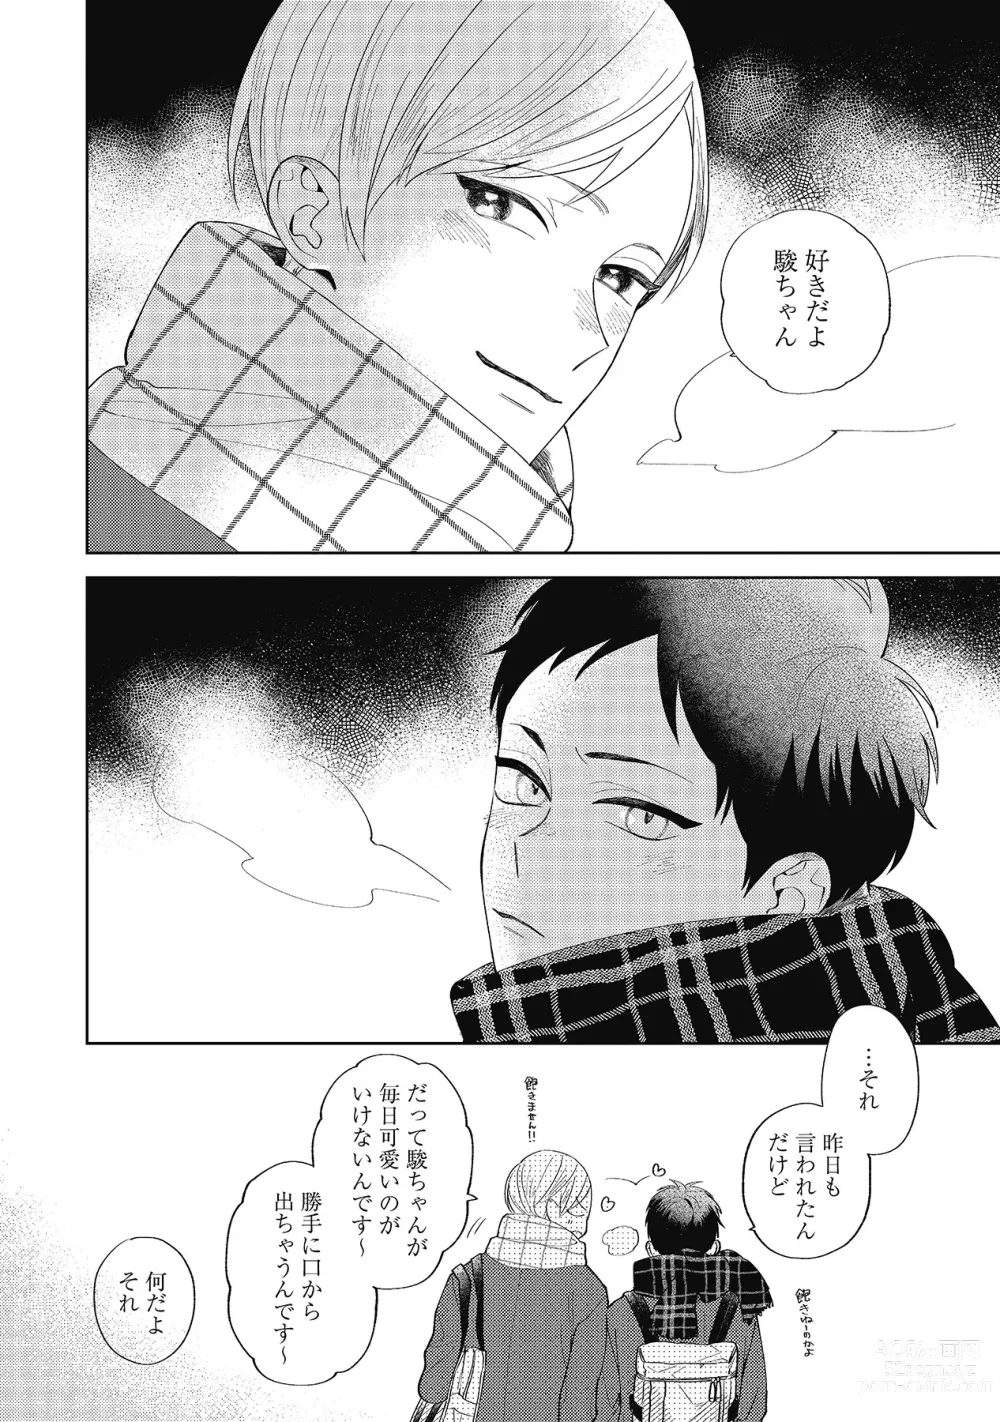 Page 6 of manga Sentimental Darling